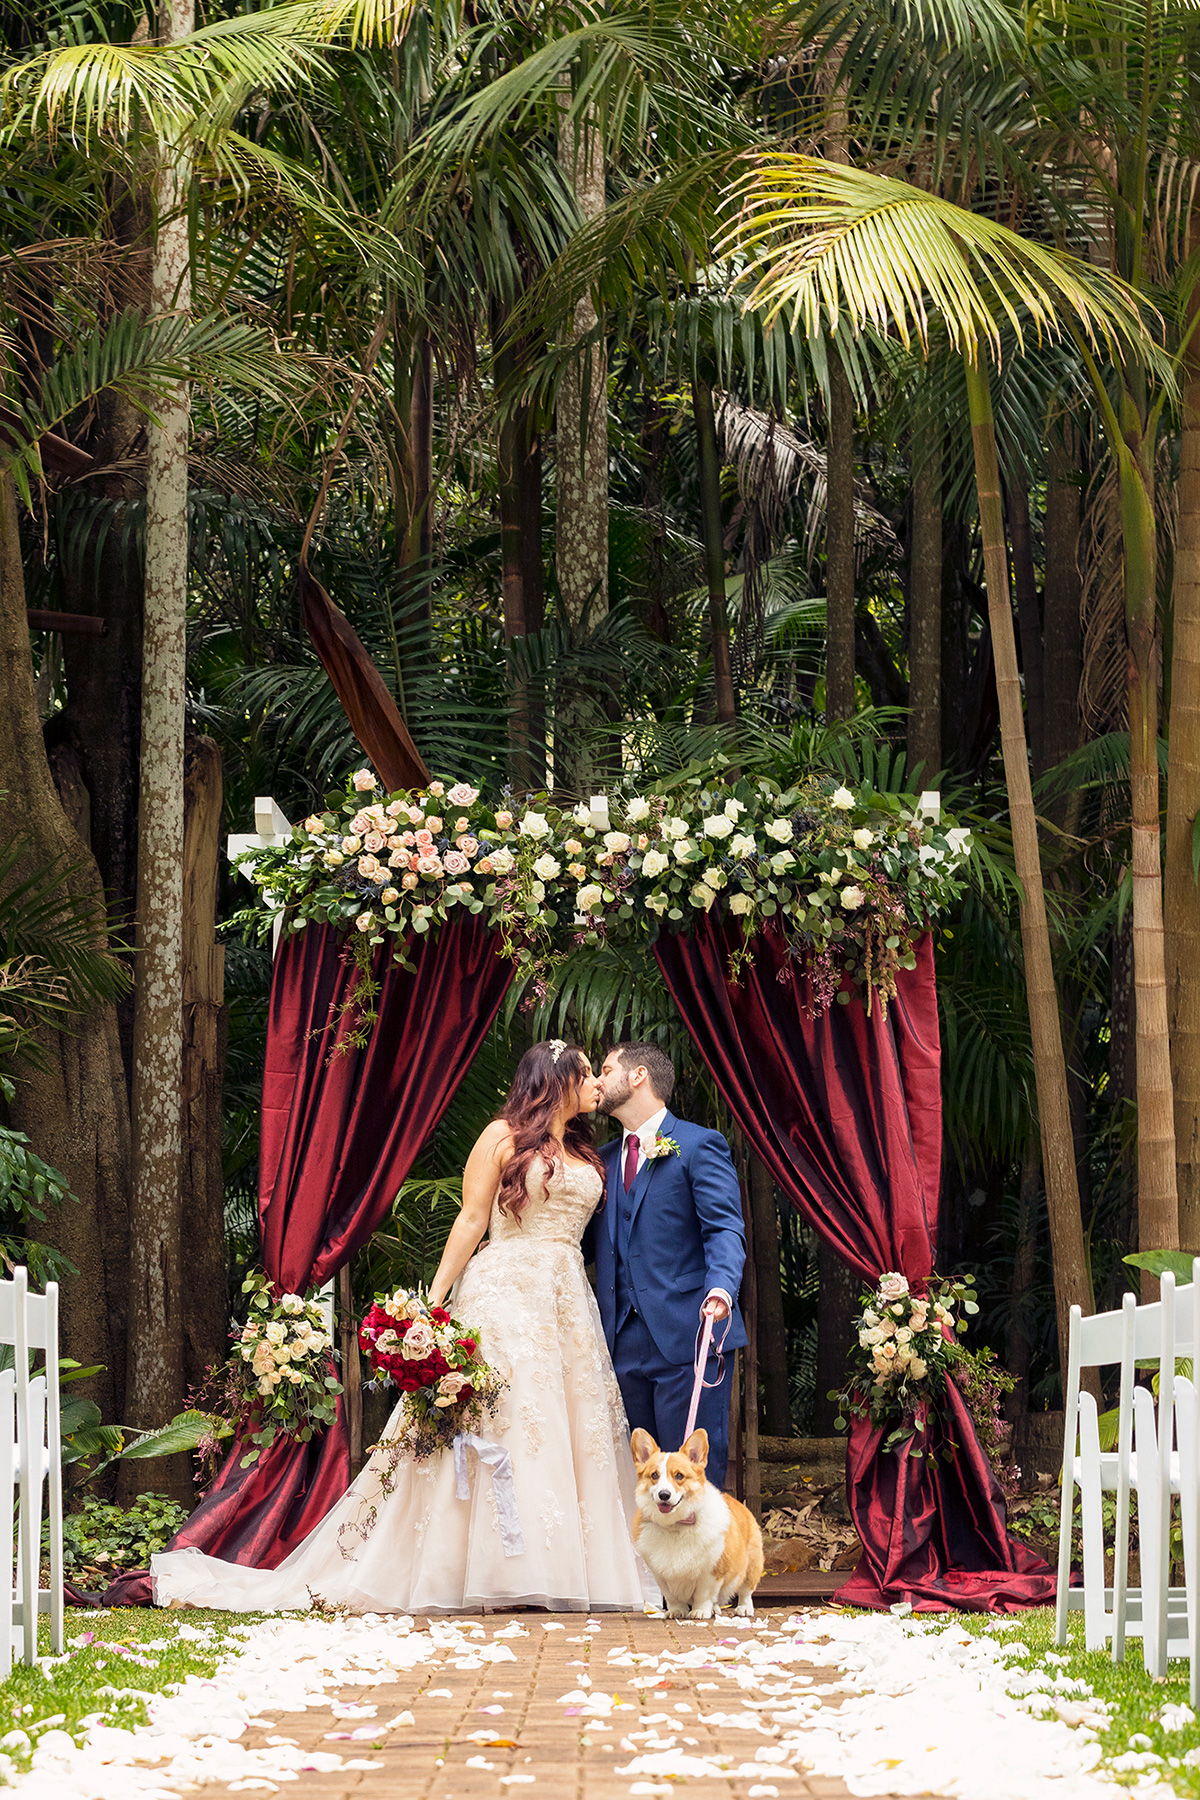 Chemere_Matthew_Enchanted-Forest-Wedding_DK-Photography_SBS_028